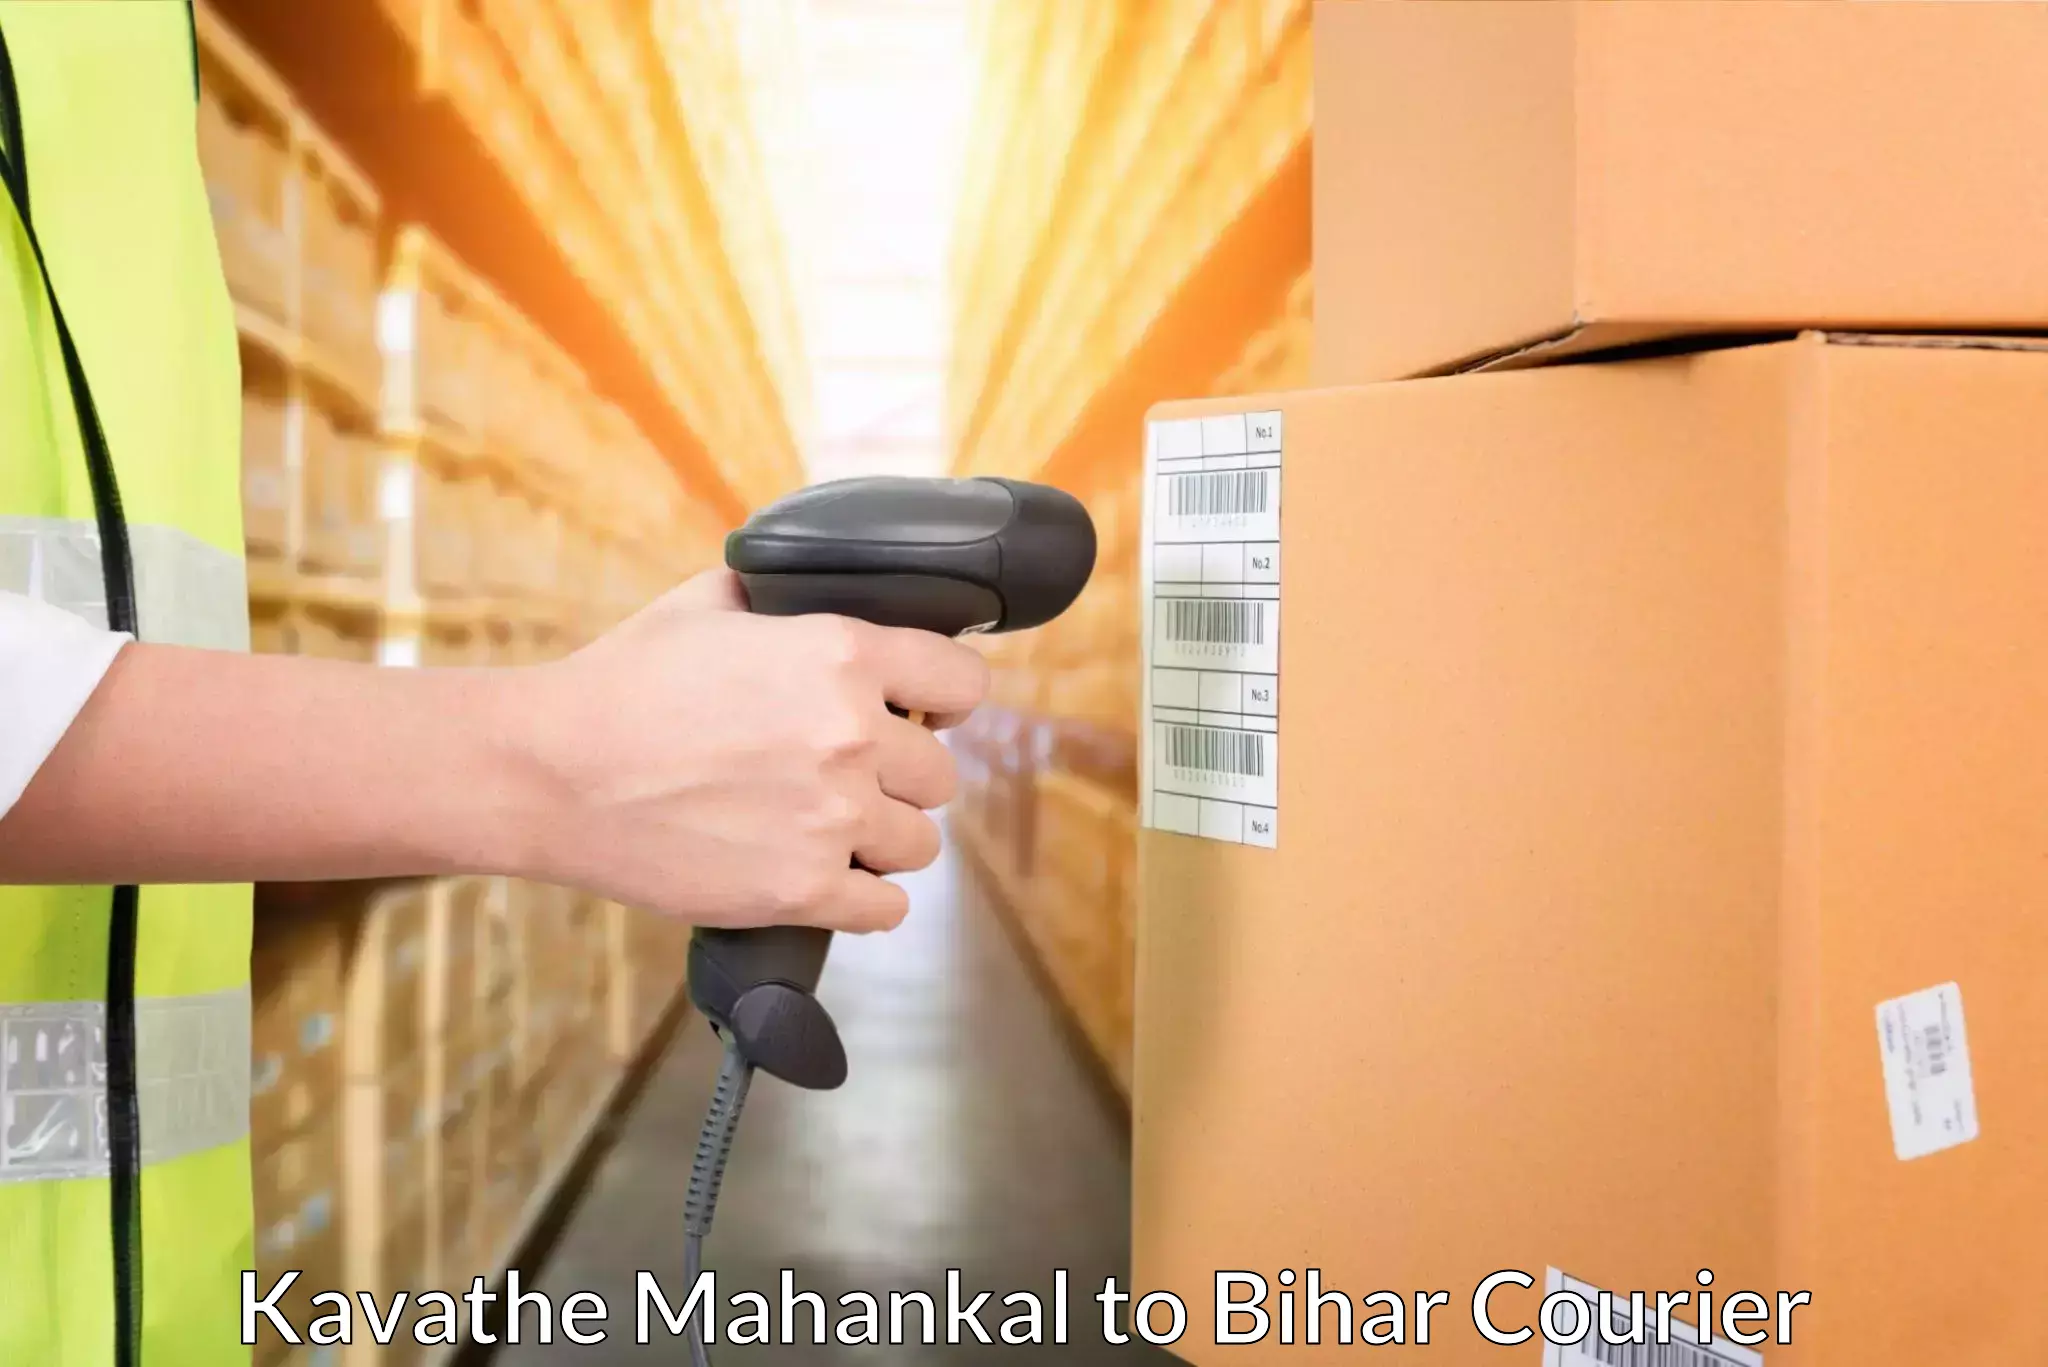 High-performance logistics Kavathe Mahankal to Aurangabad Bihar